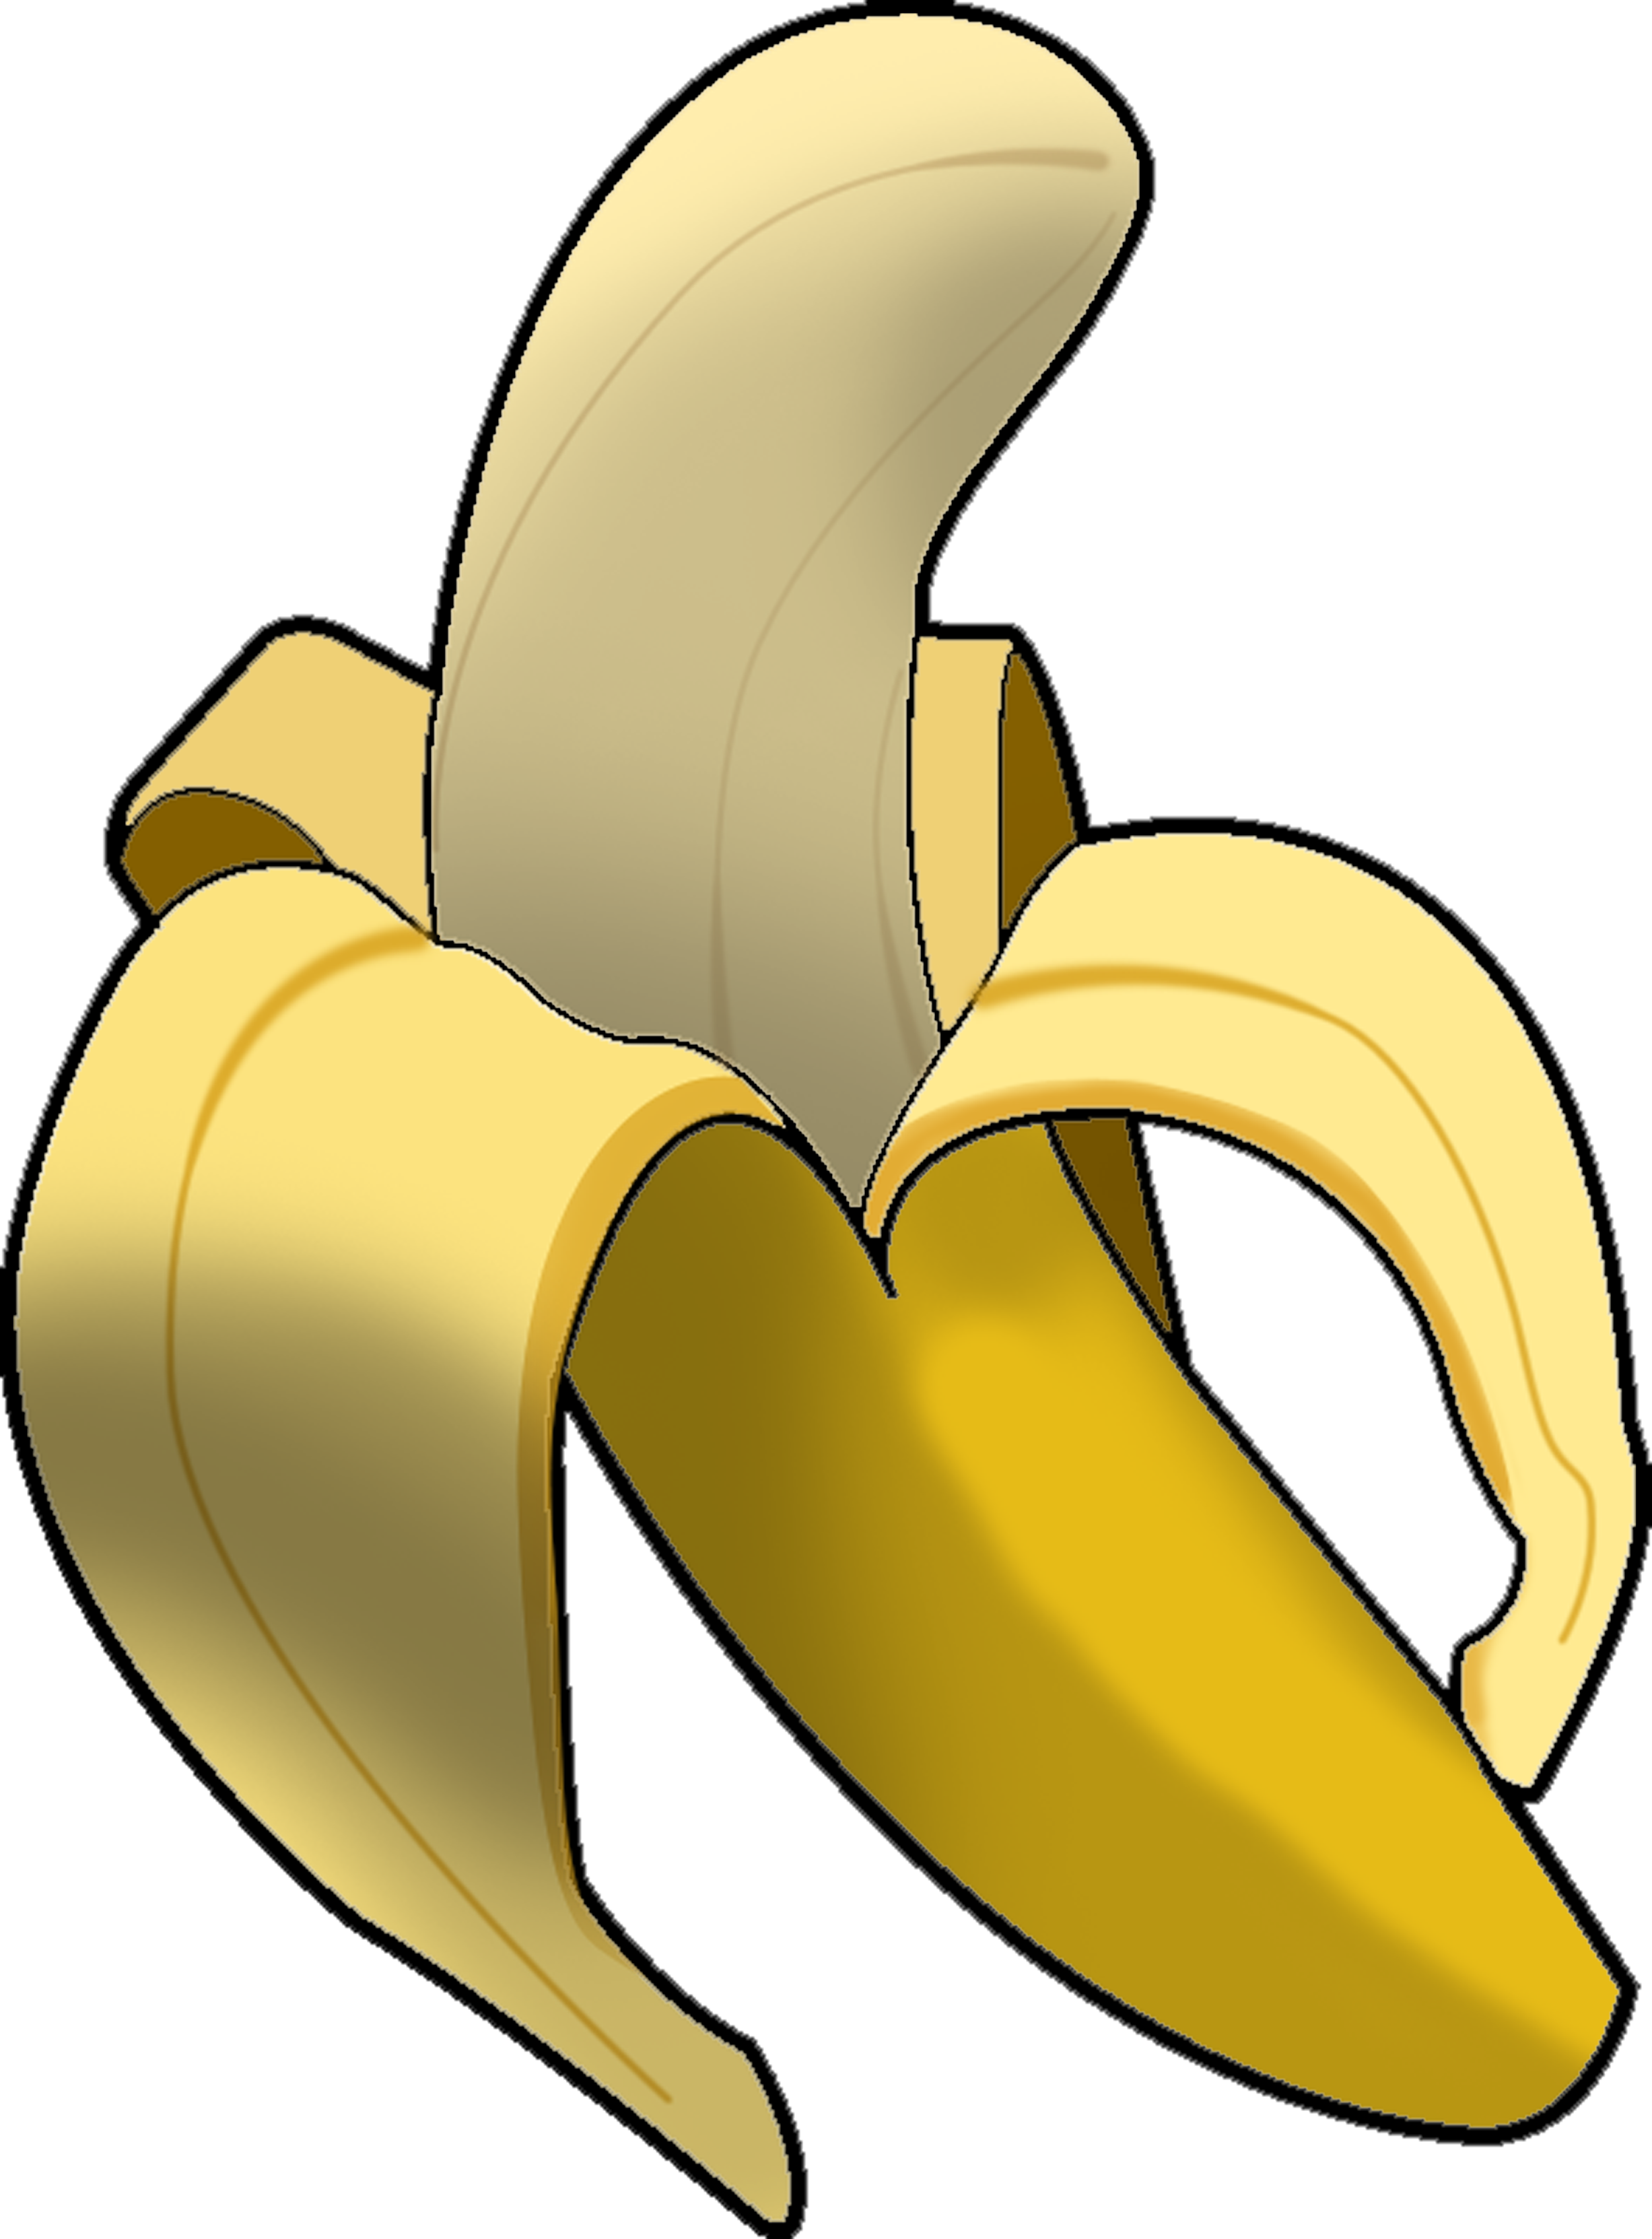 Plantain Banana image - vector clip art online, royalty free 